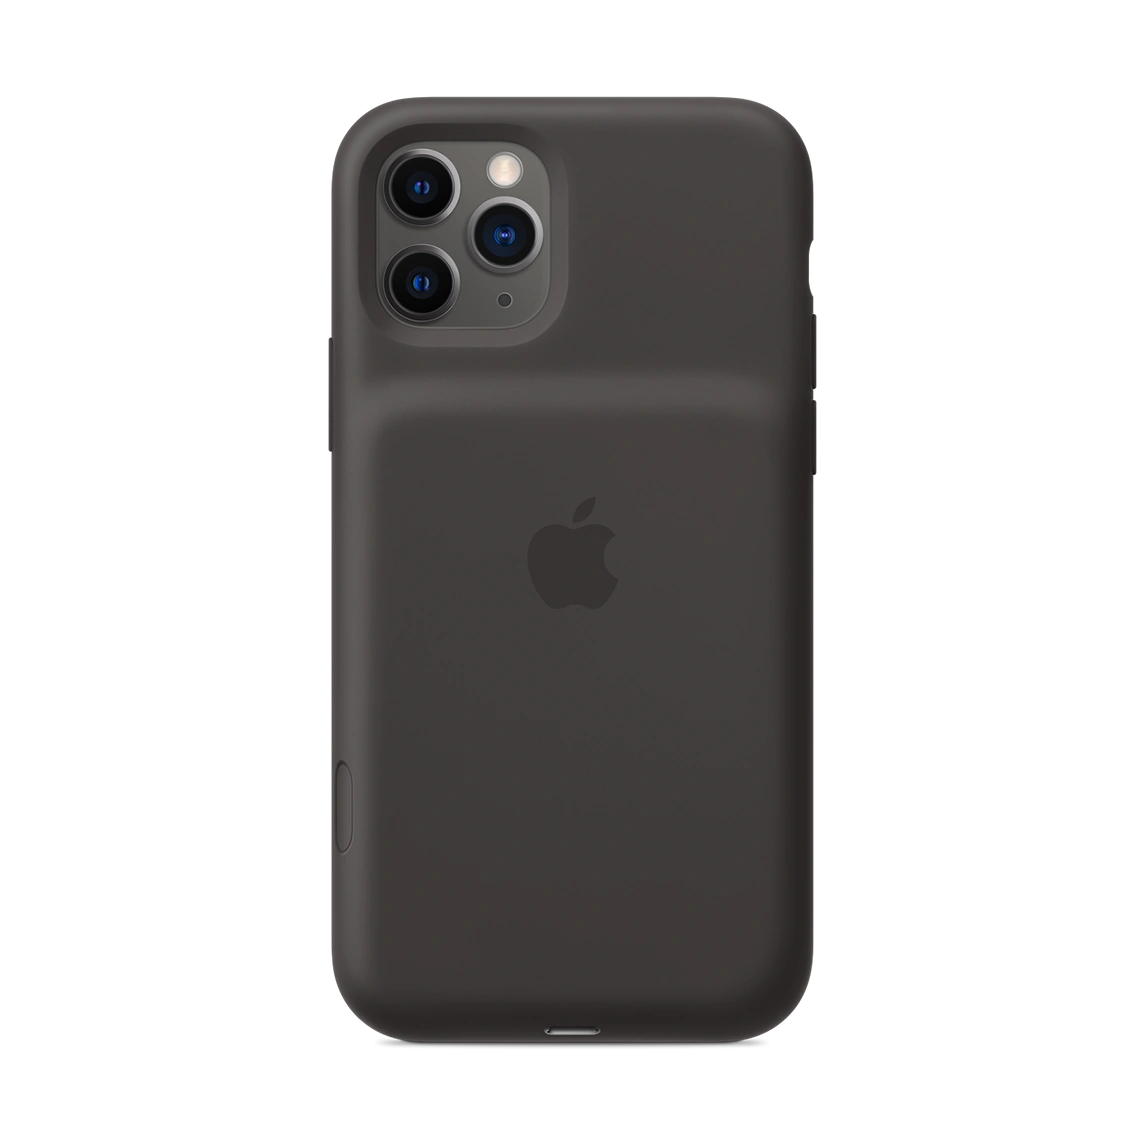 Apple iPhone 11 Pro Smart Battery Case